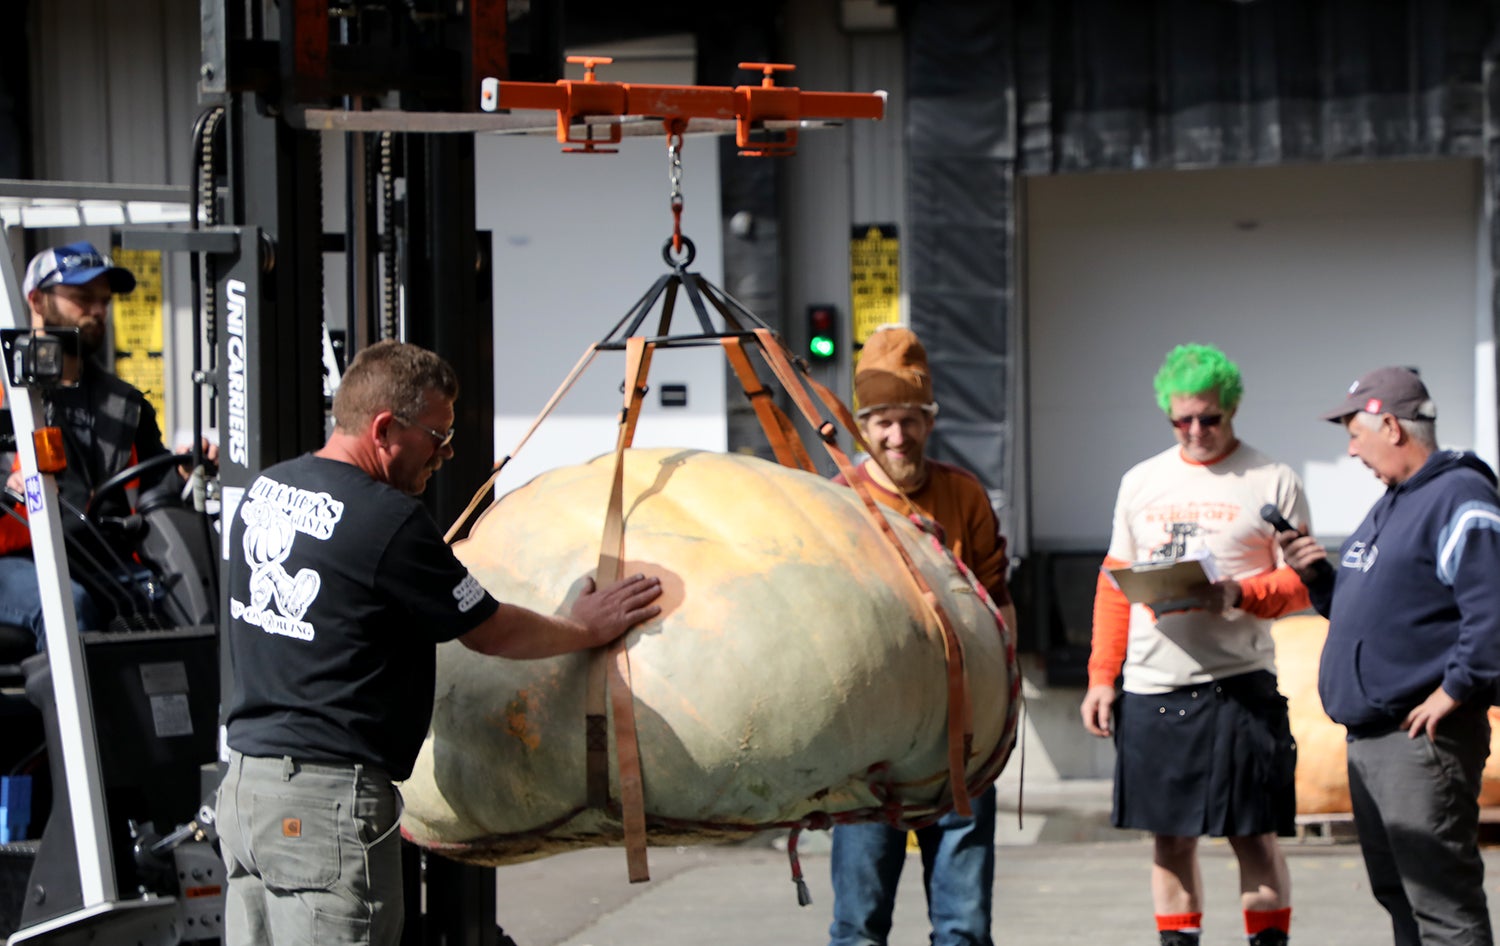 Several men crowding a giant pumpkin